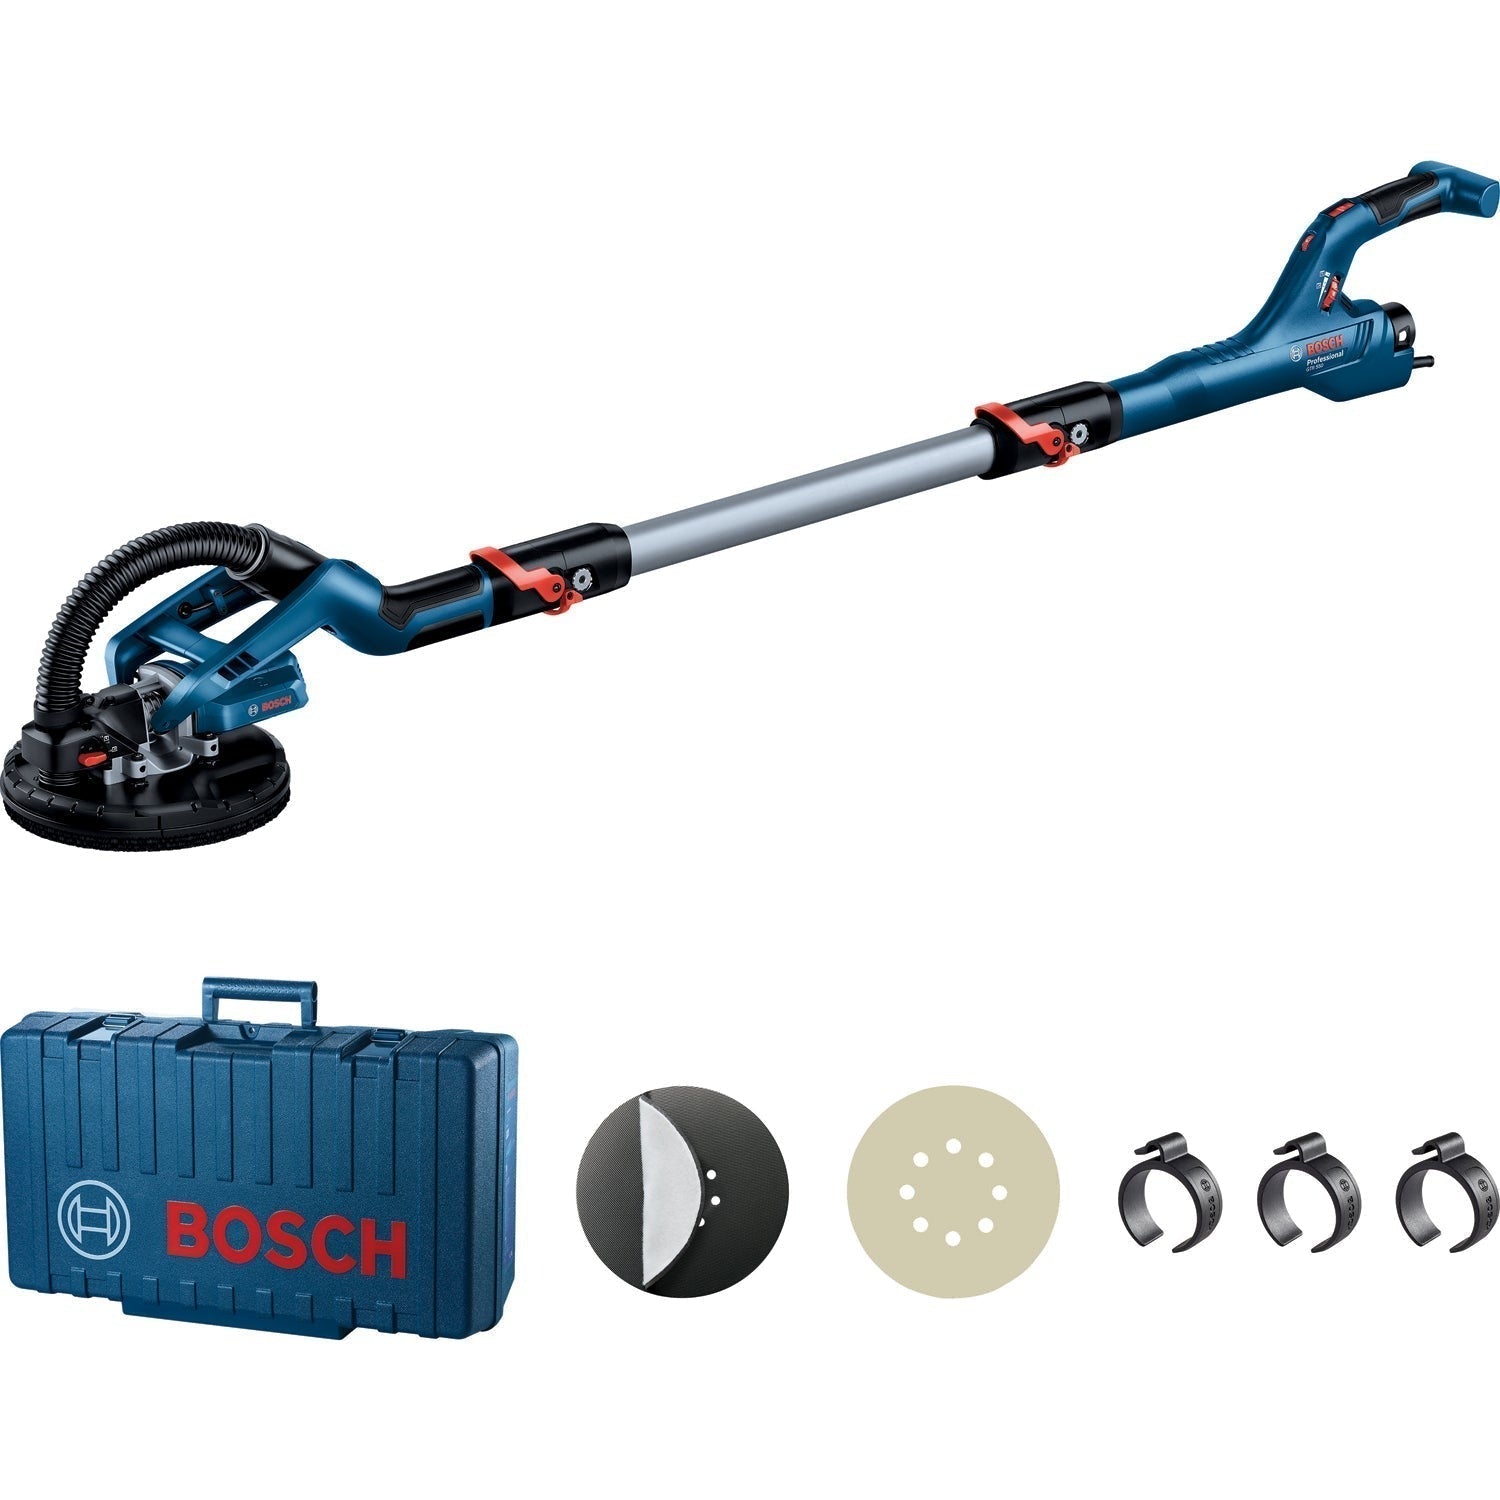 Bosch Professional Drywall Sander GTR 550 06017D40K0 Power Tool Services